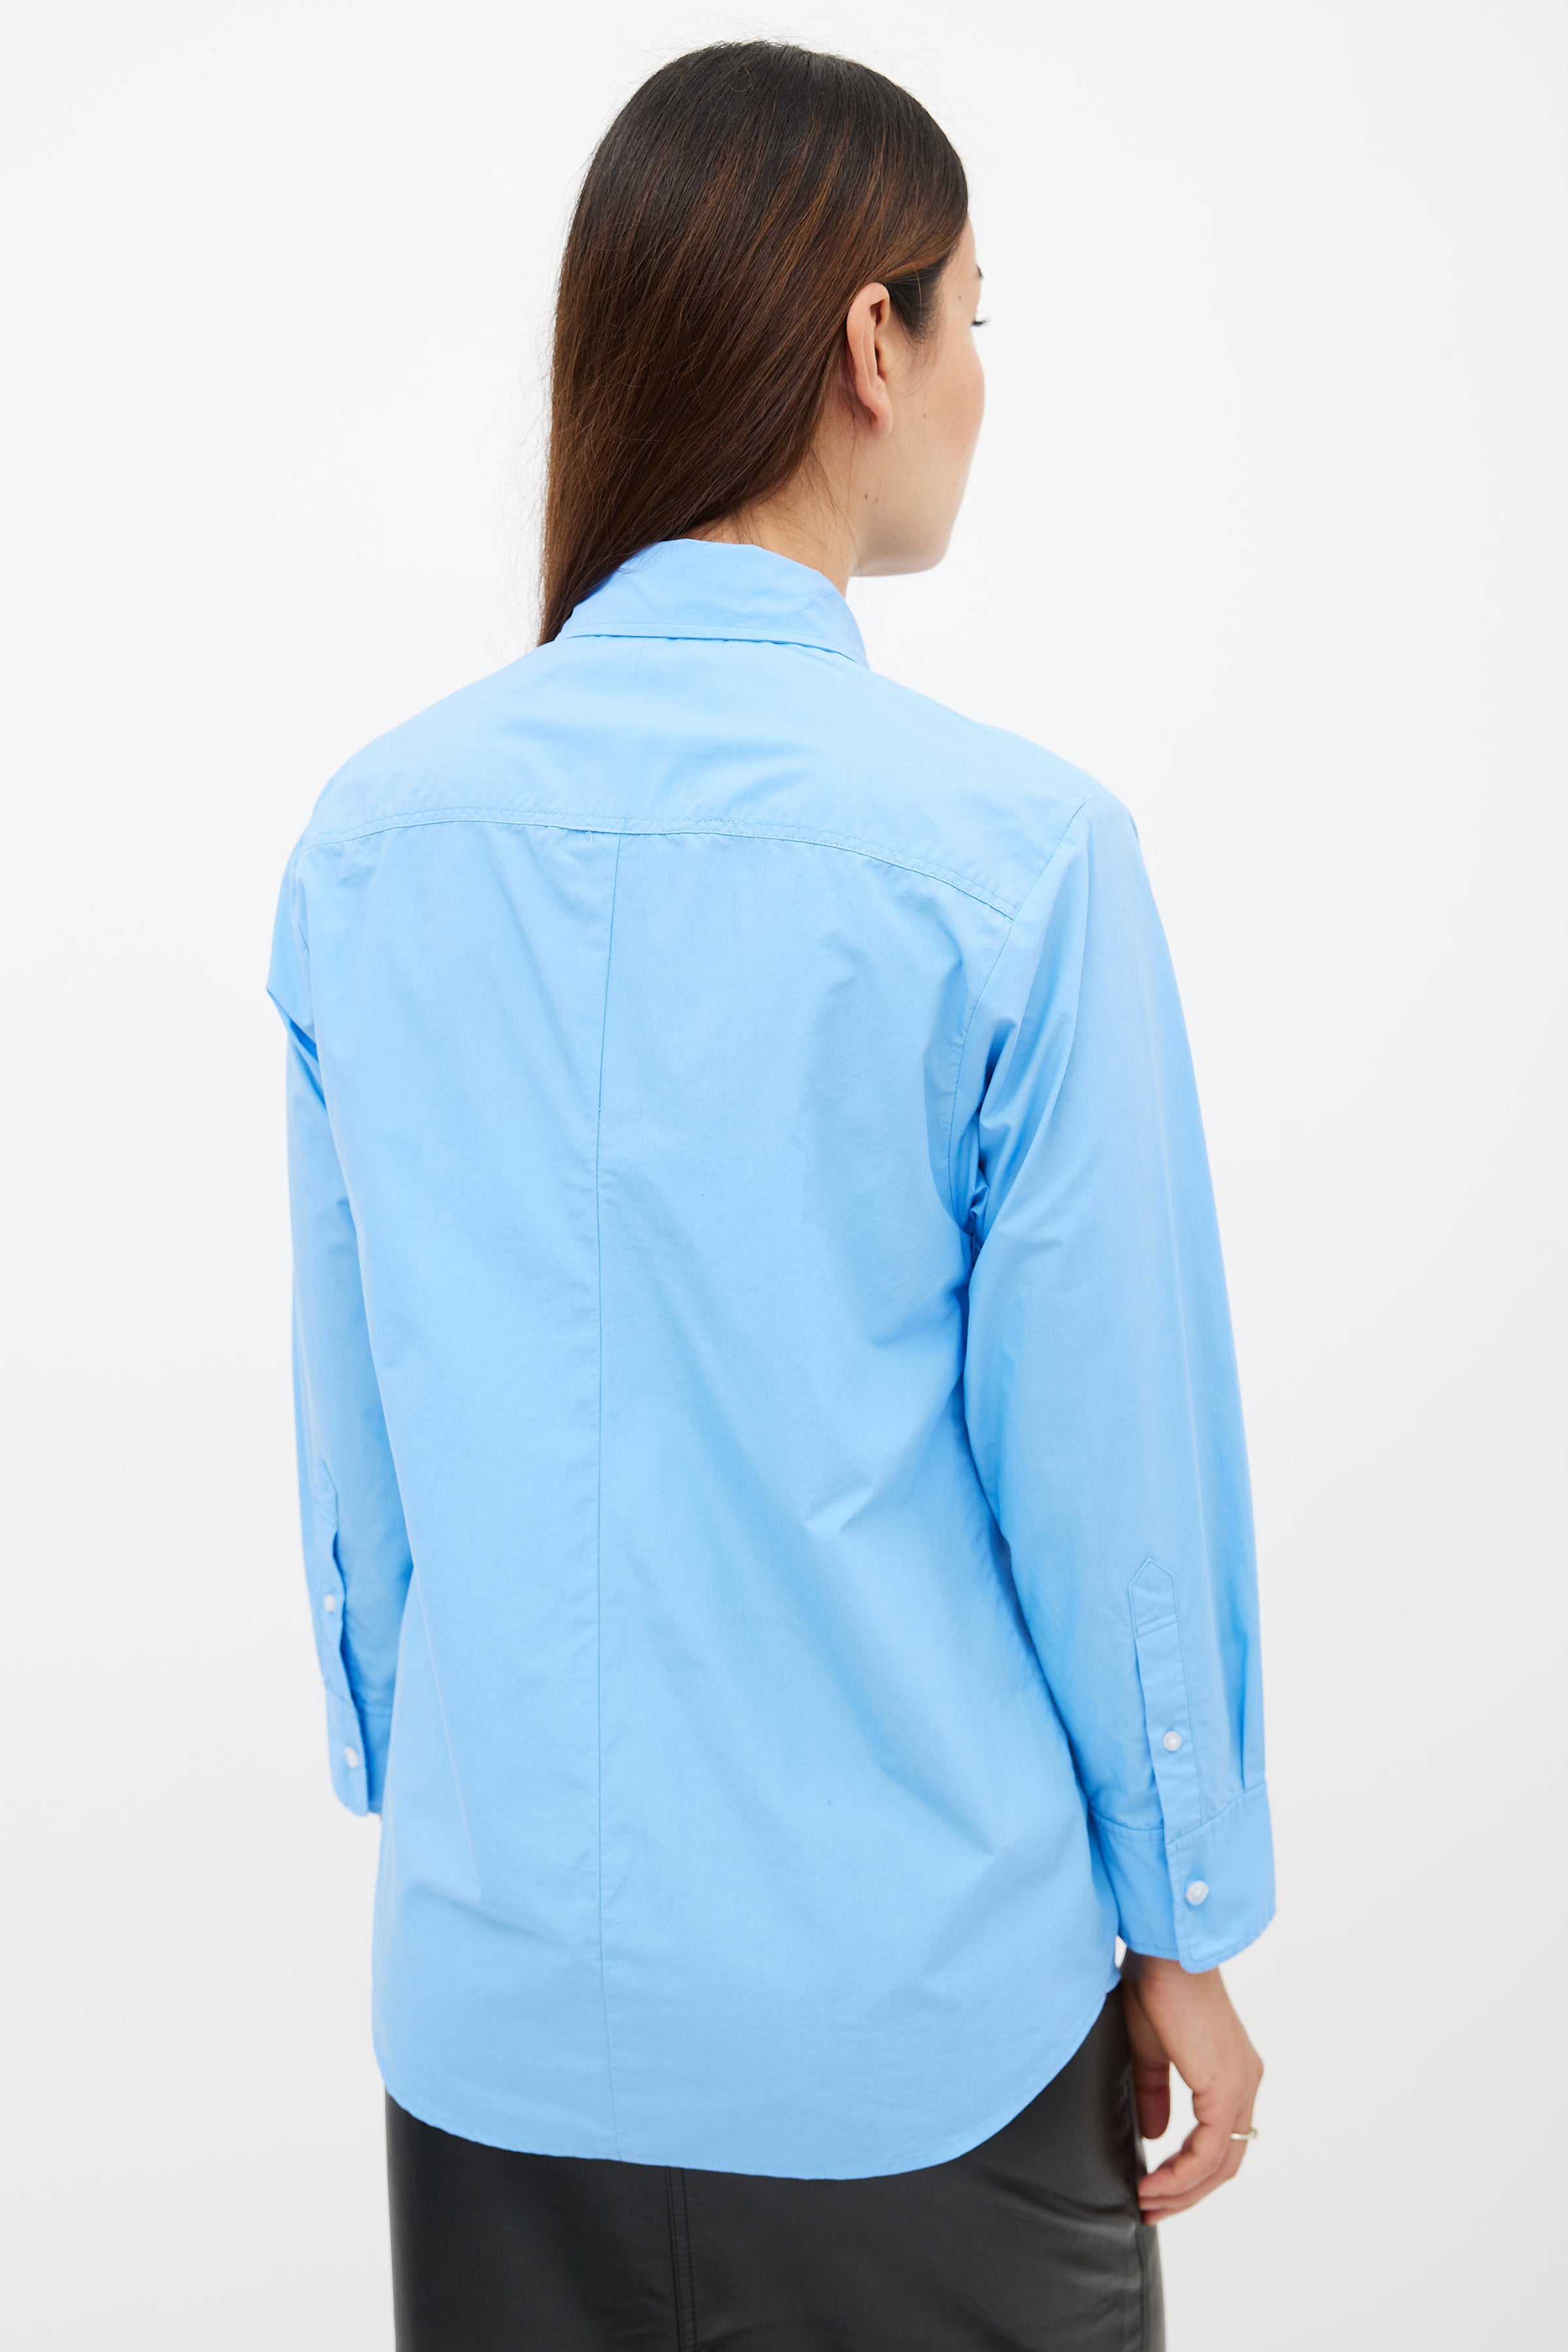 T Alexander Wang Women's Sheer Striped Long Sleeve T-Shirt Blue Size S -  Shop Linda's Stuff